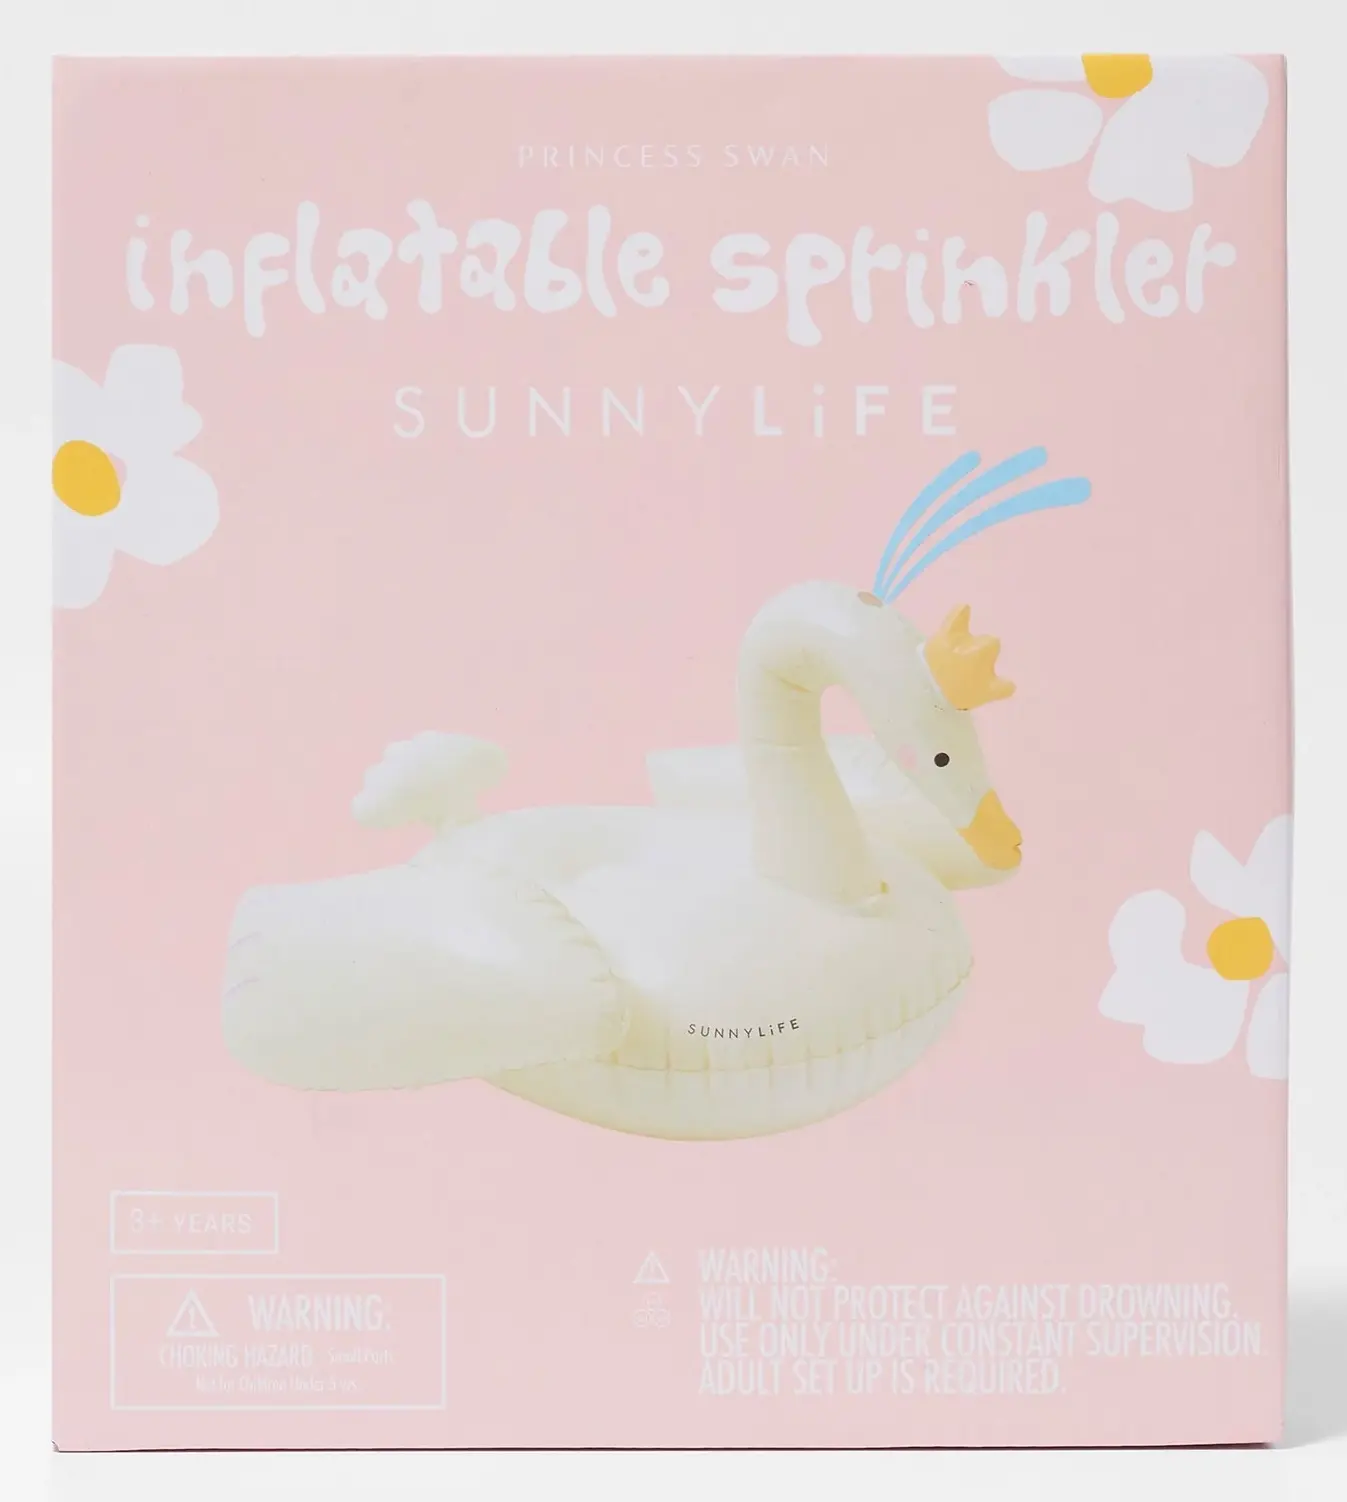 Sunnylife Inflatable Sprinkler Princess Swan Multi